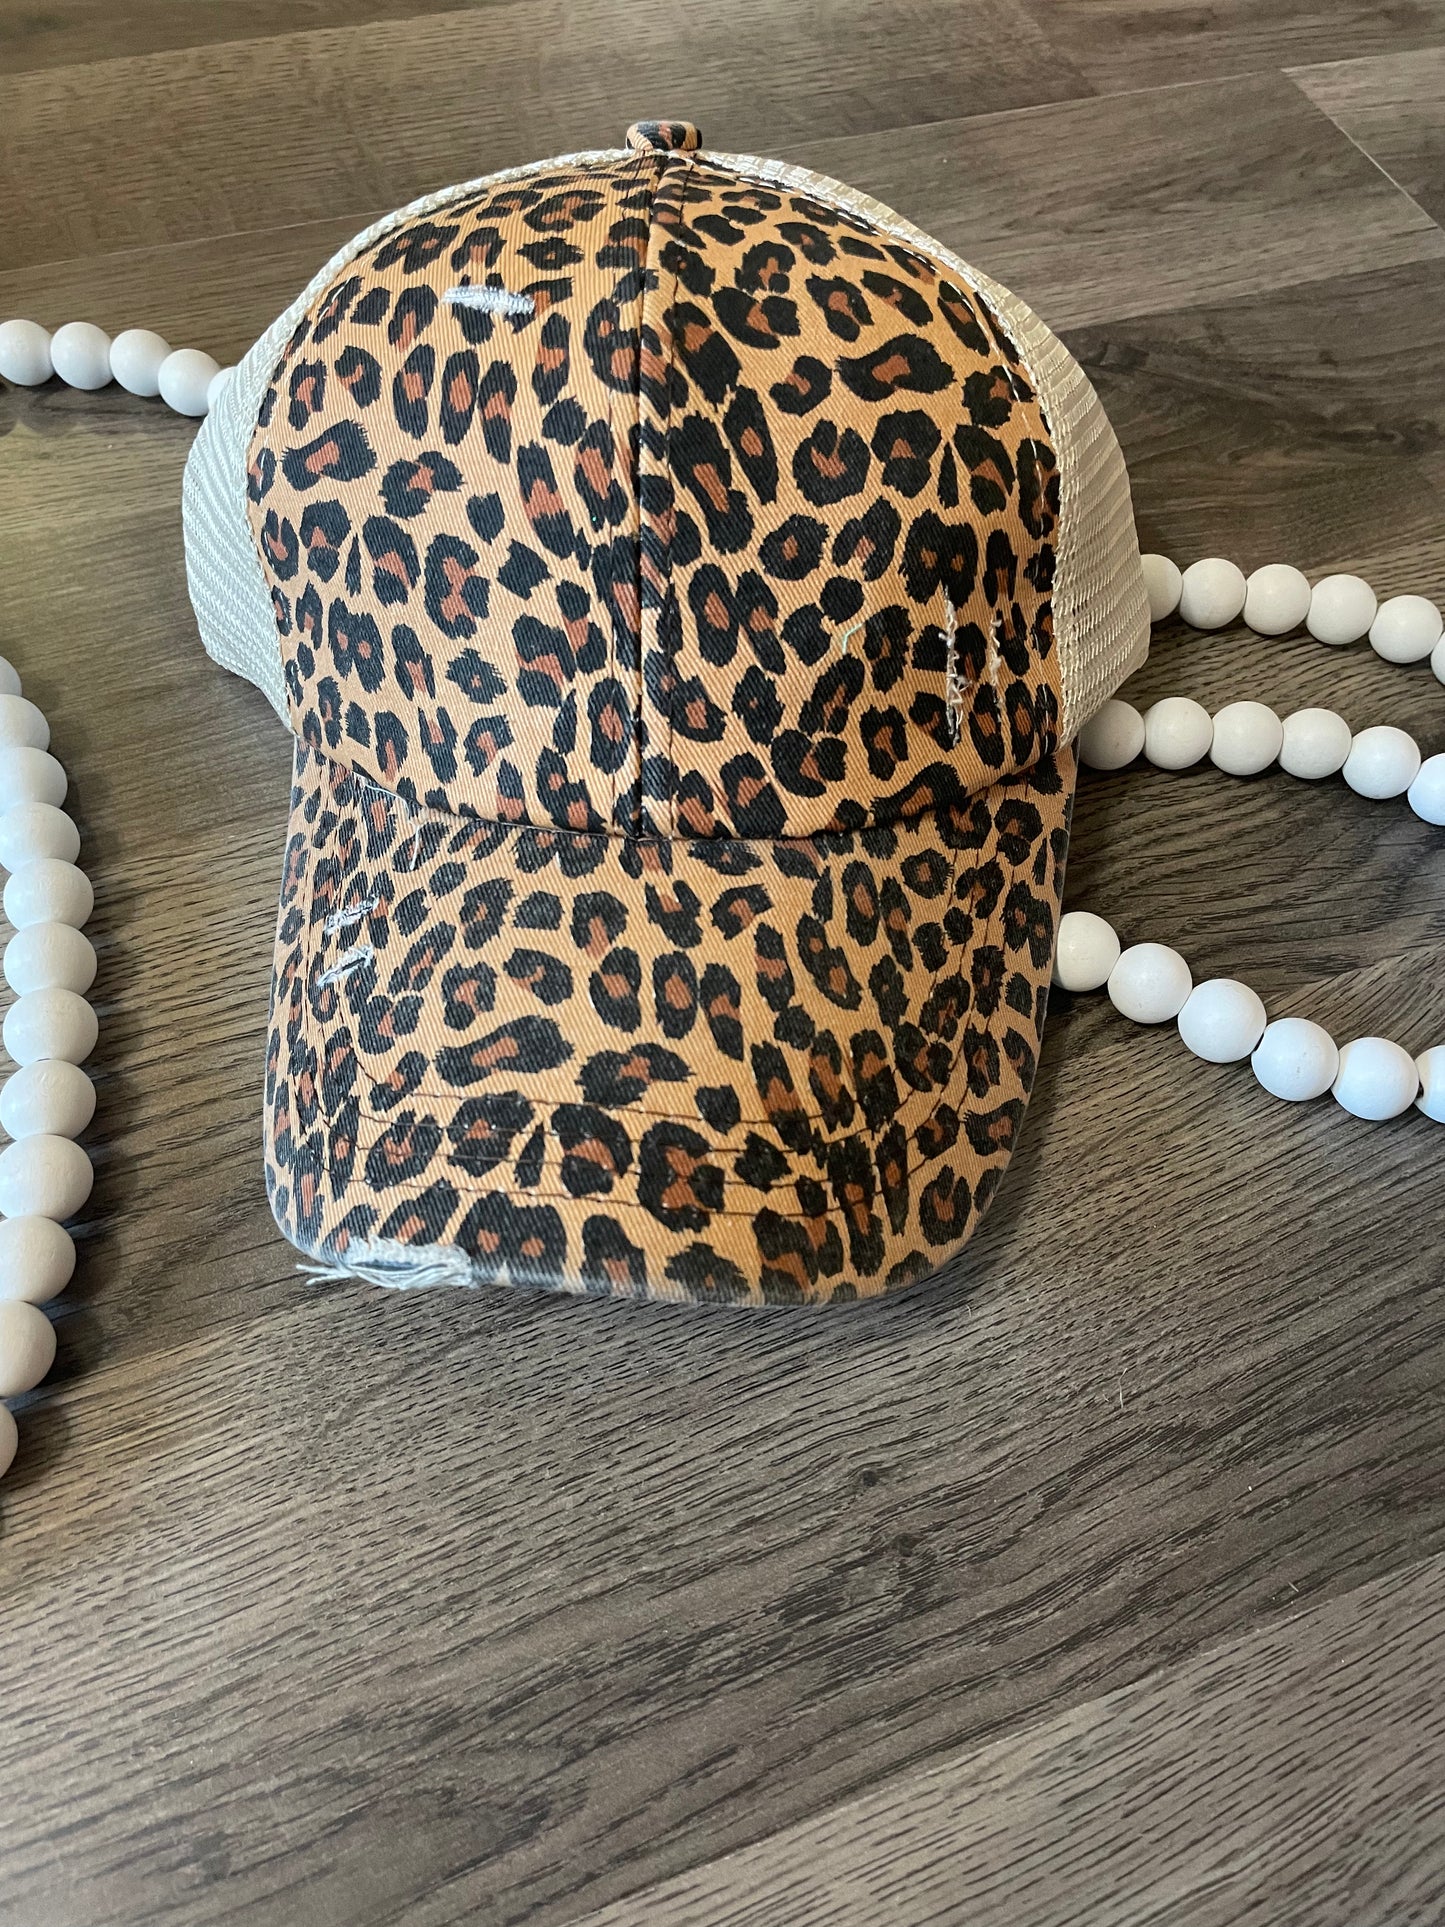 Distressed leopard criss cross hat